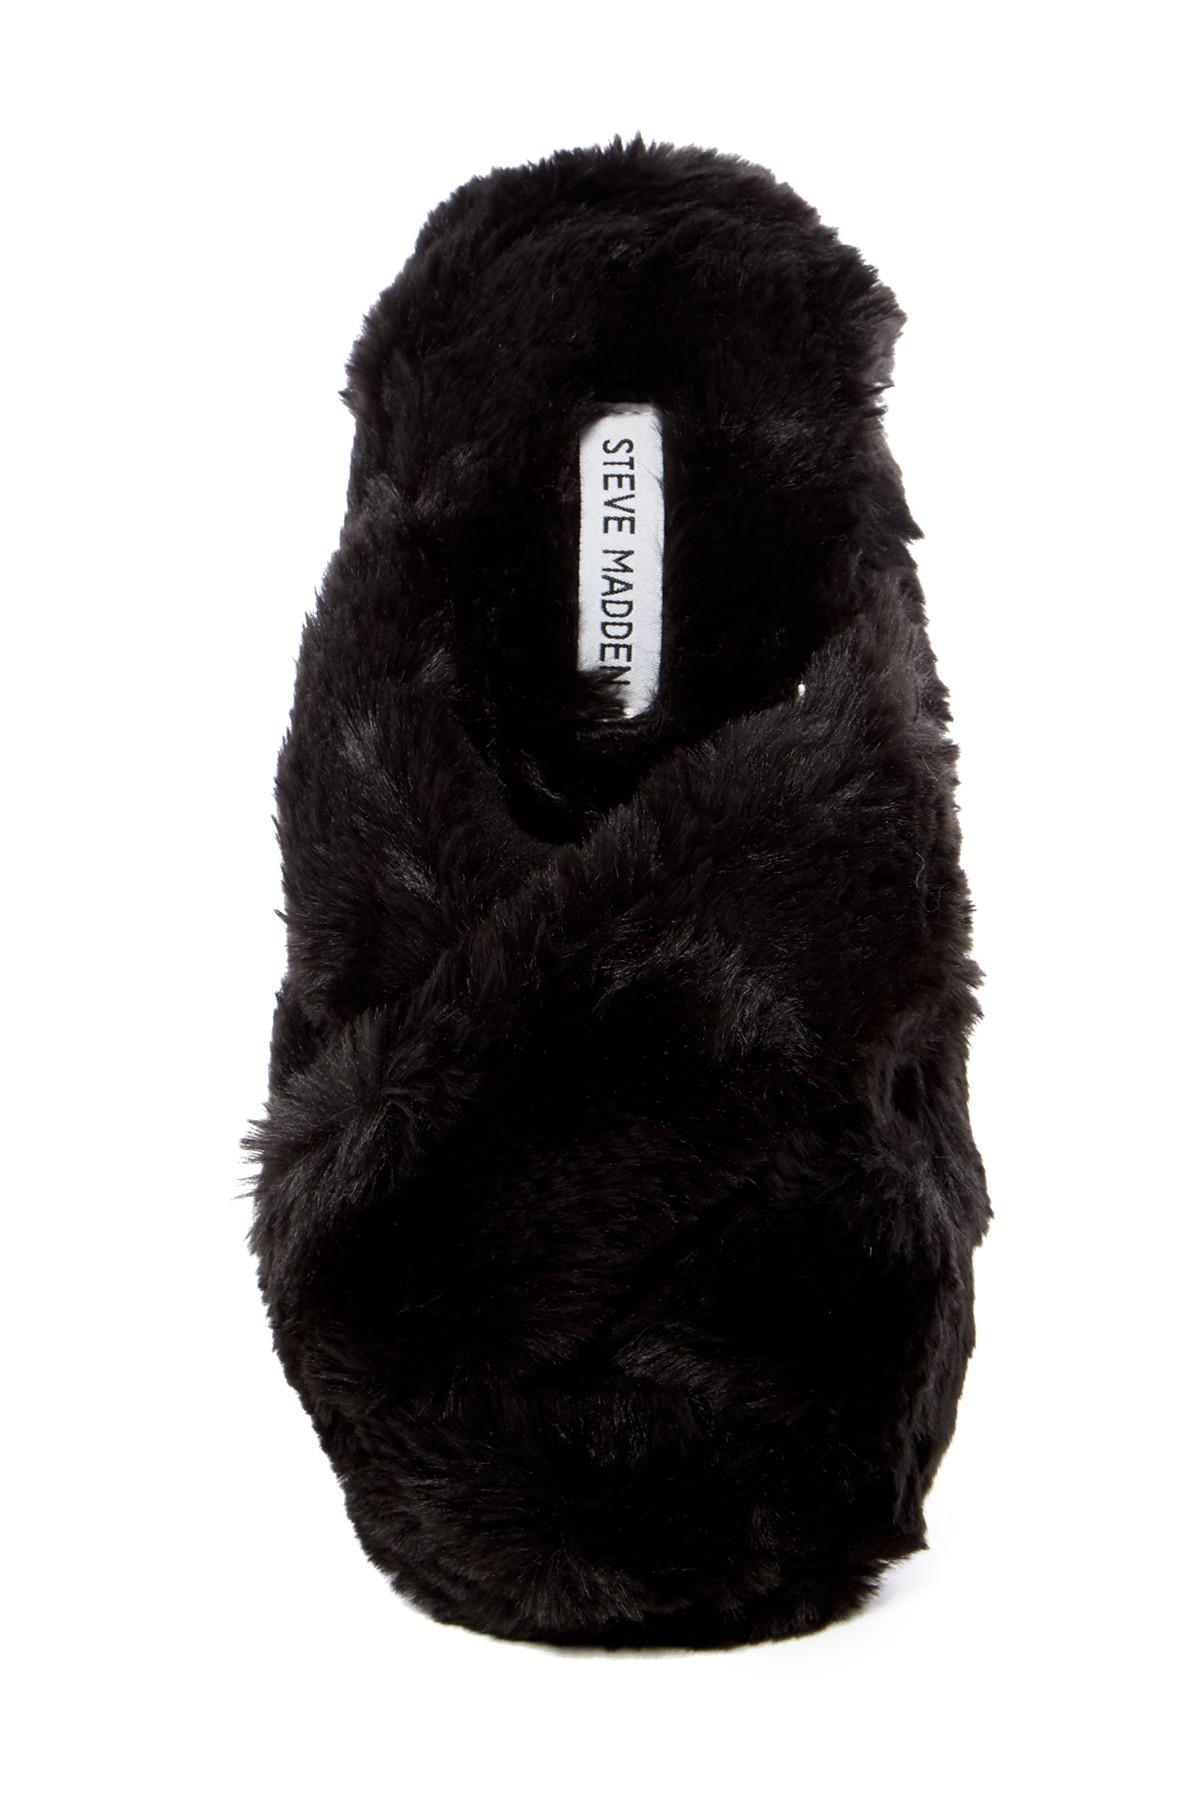 Steve Madden Fur Slippers Deals, 60% OFF | www.slyderstavern.com